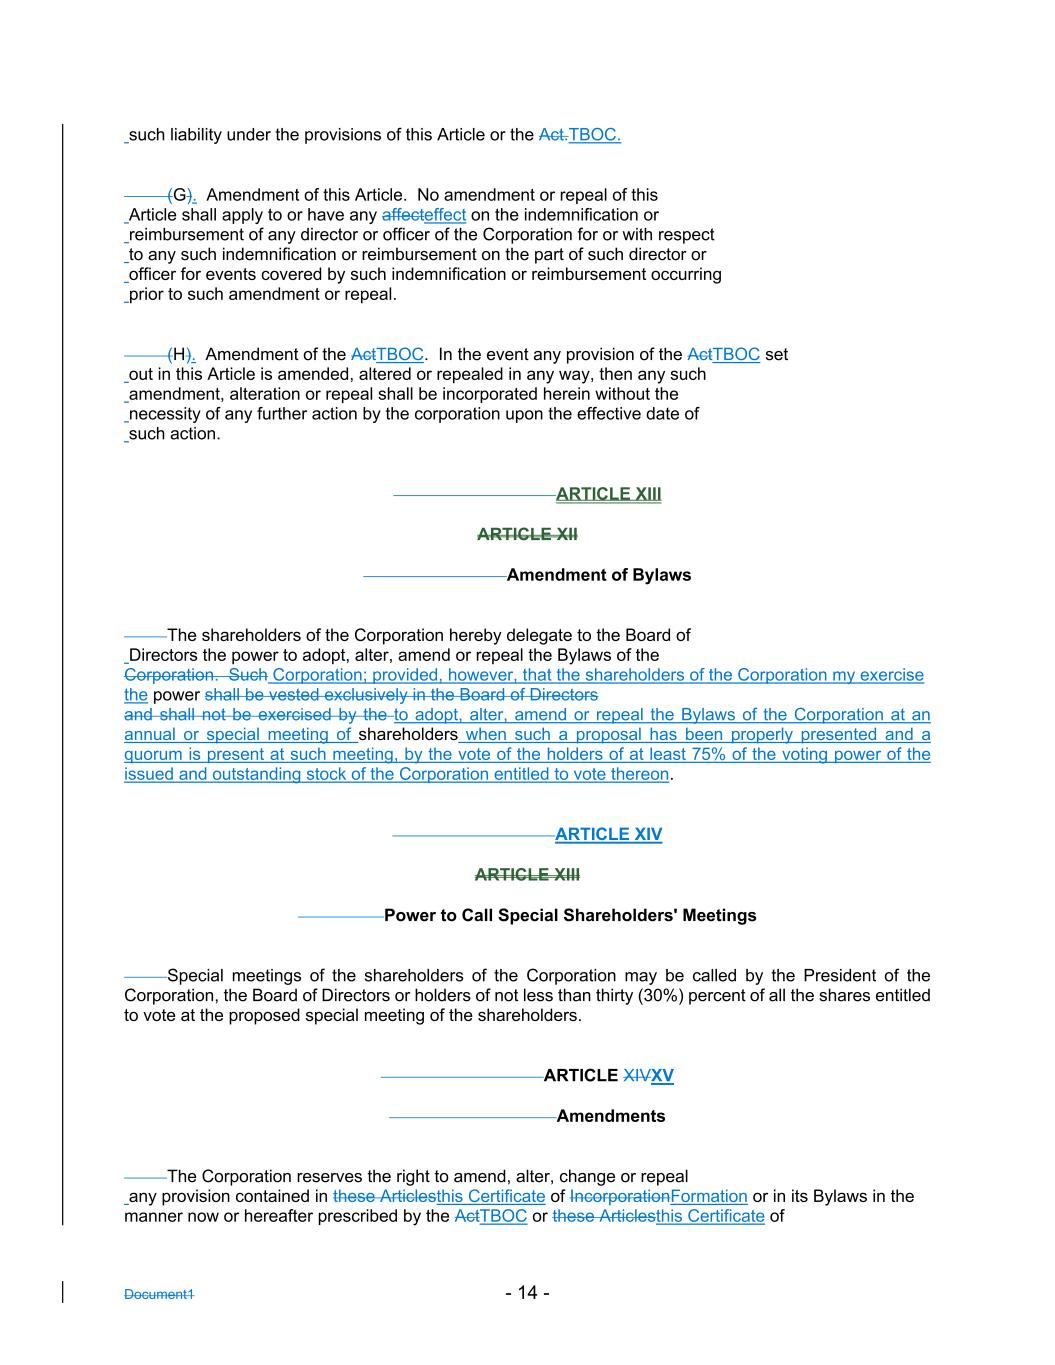 Microsoft Word - Cumulative Redline DXP Certificate of Formation.docx014.jpg